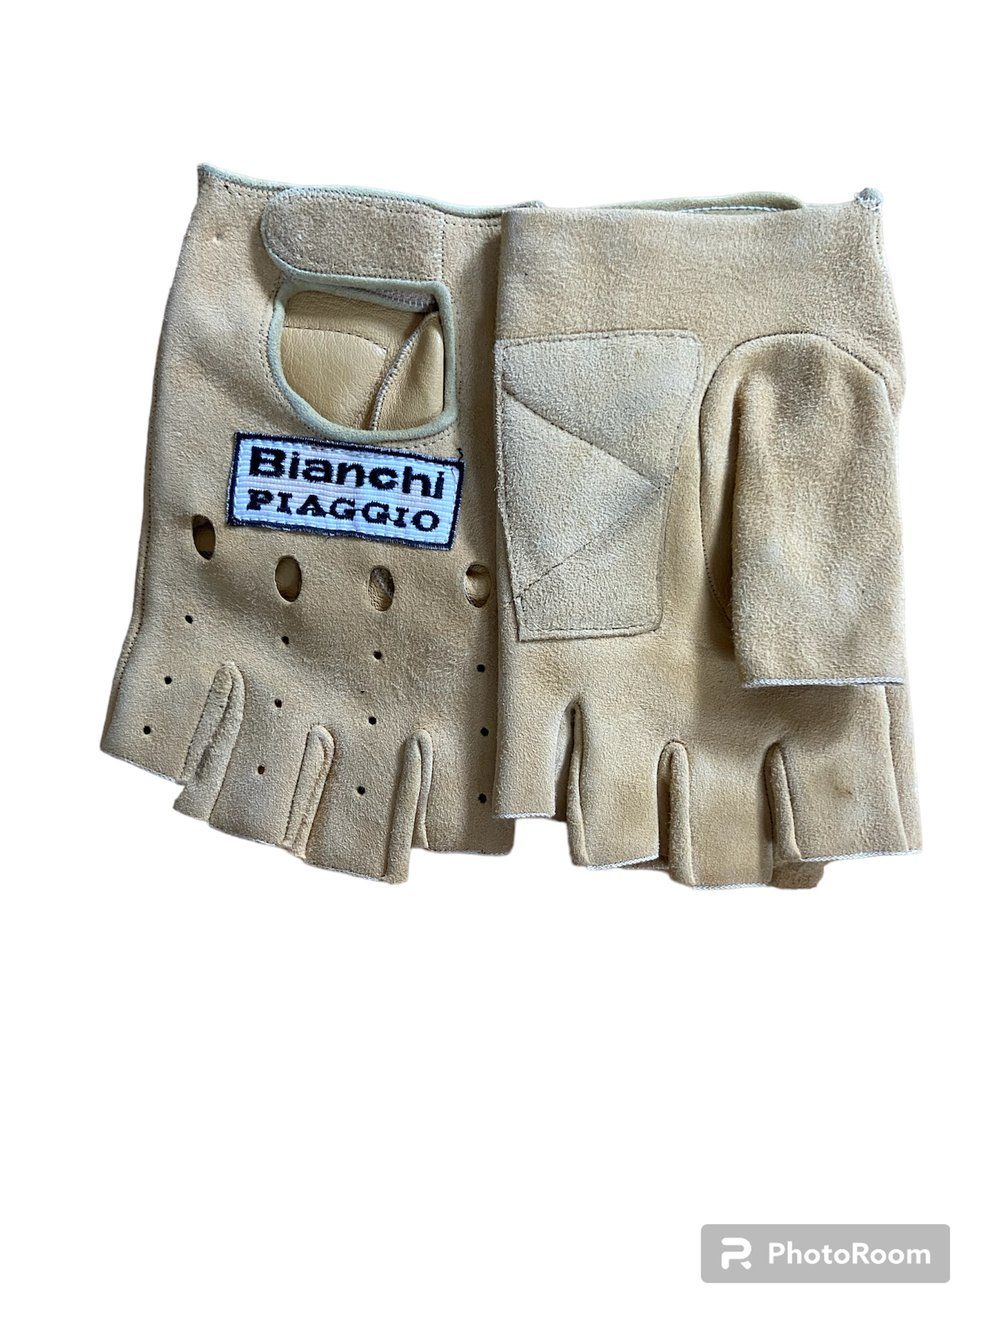 Vintage 1984 Bianchi Piaggio Cycling Gloves